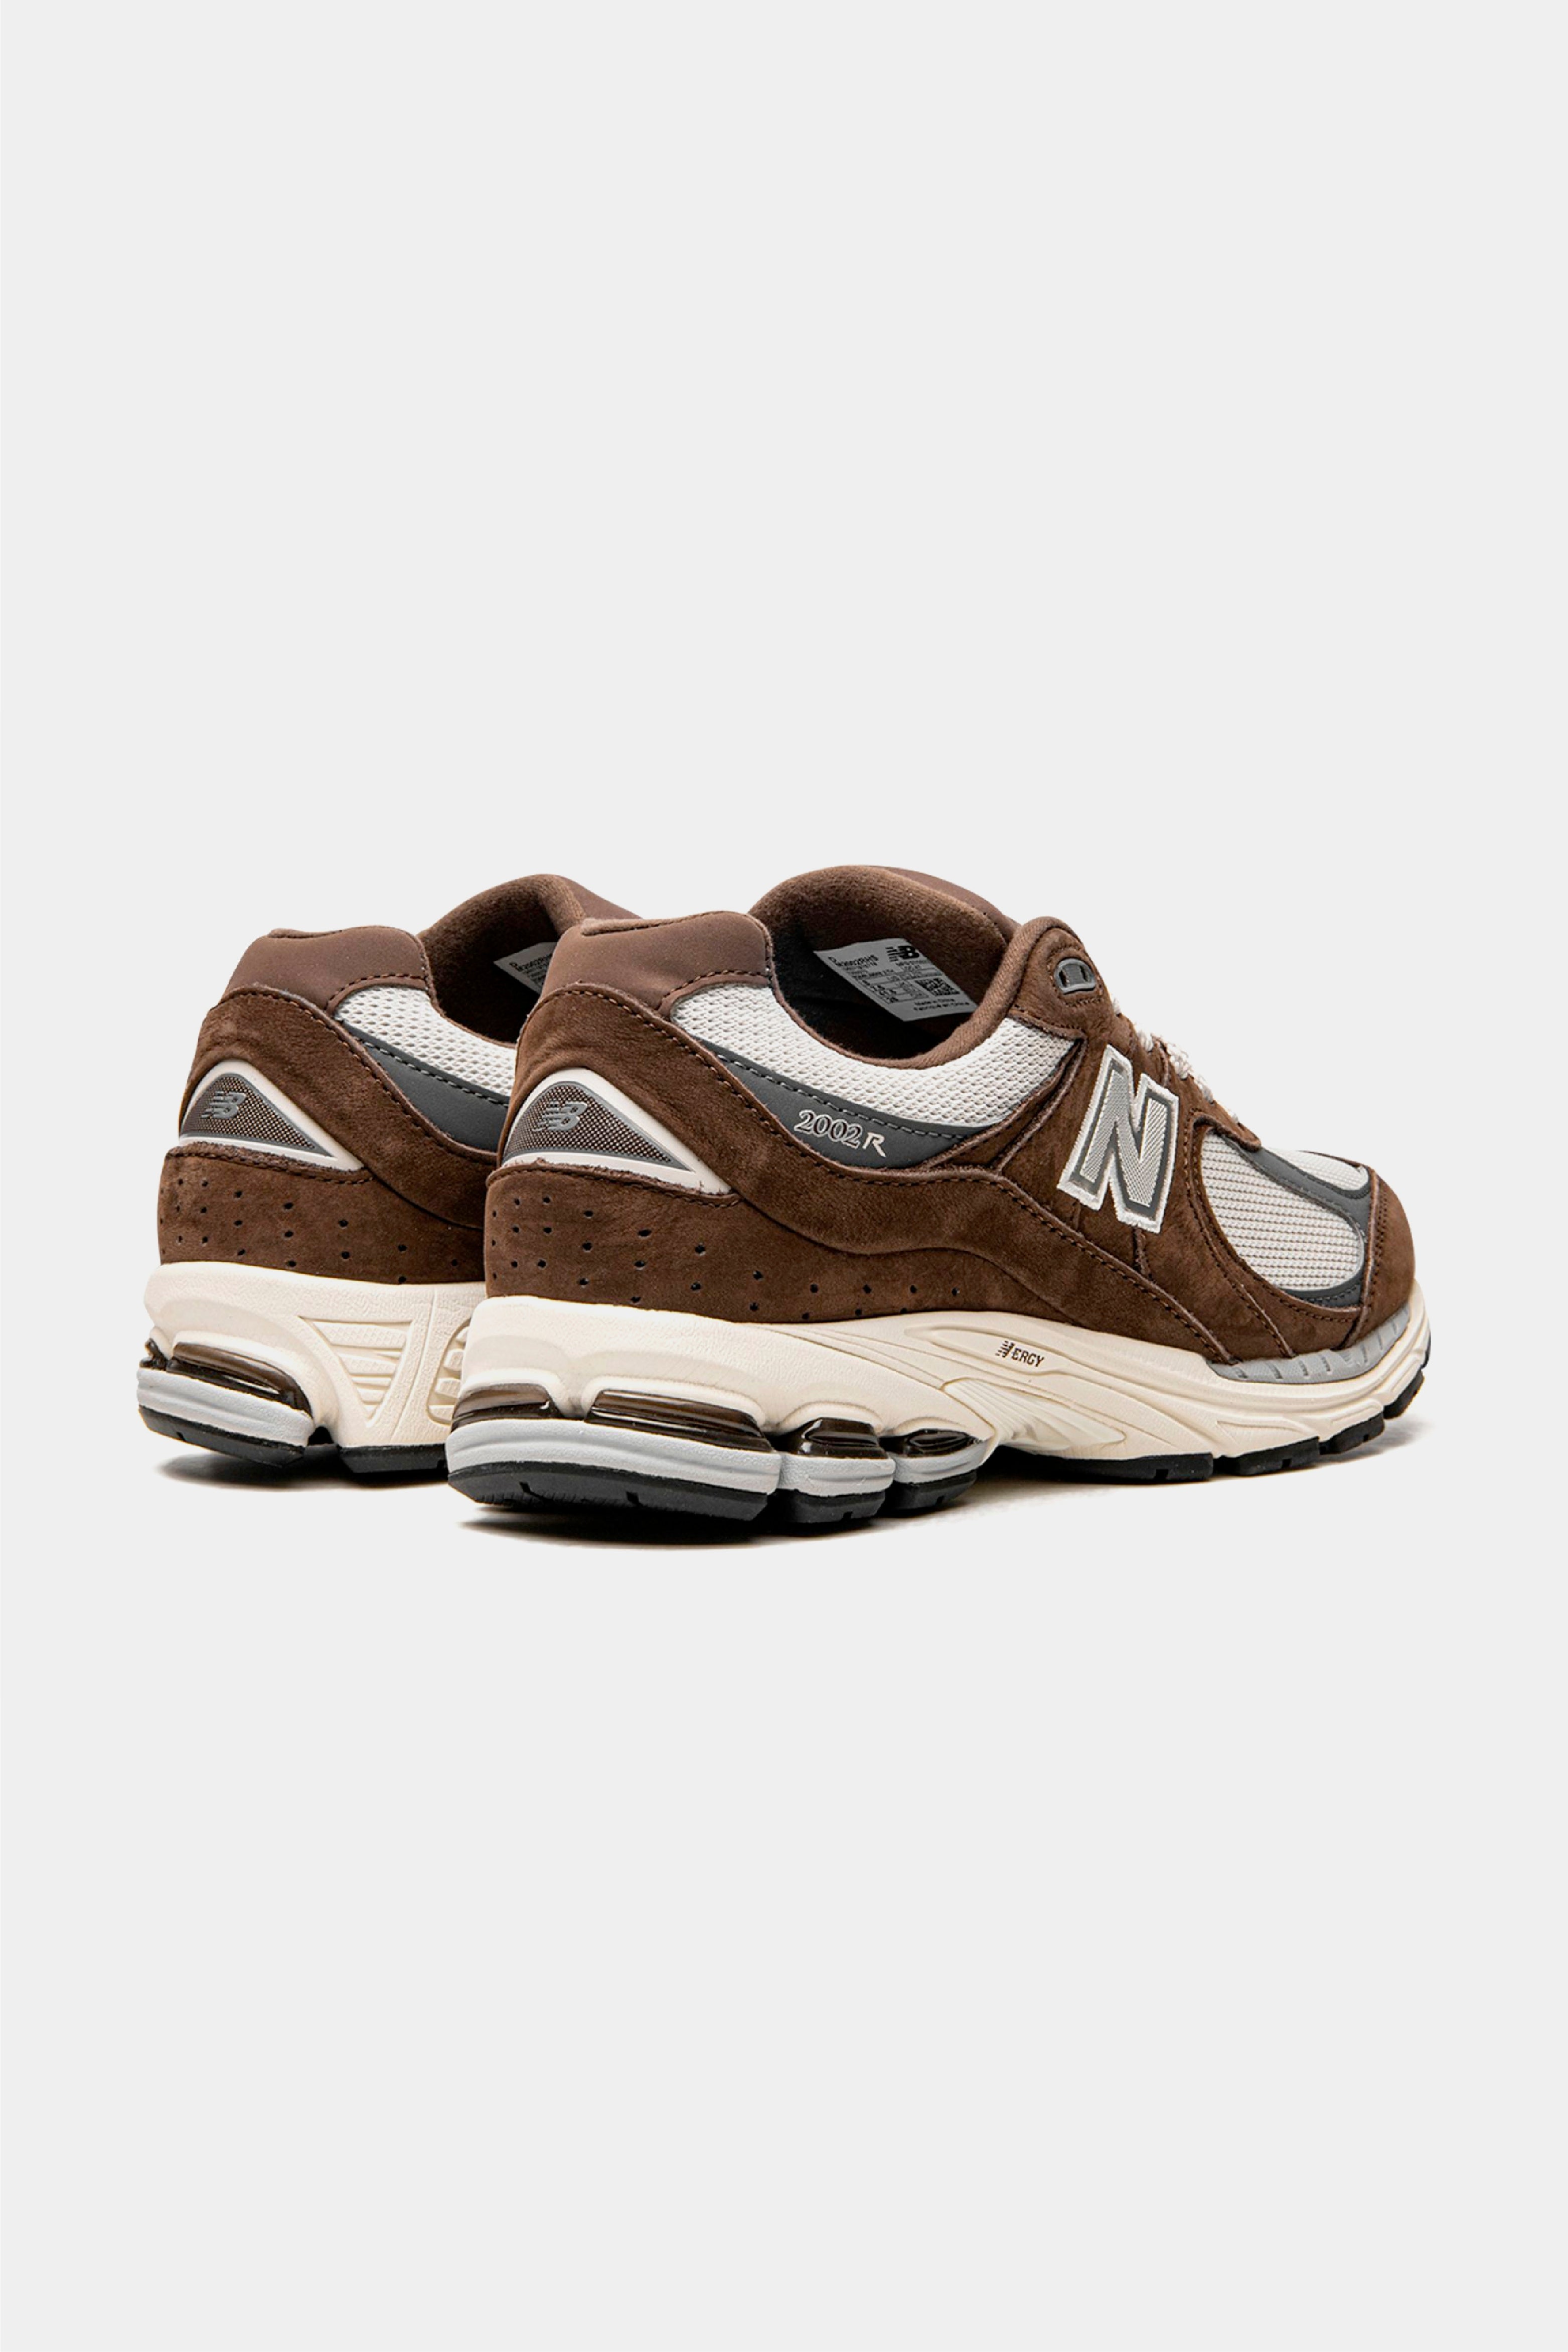 Selectshop FRAME - NEW BALANCE 2002R "Brown Beige" Footwear Concept Store Dubai